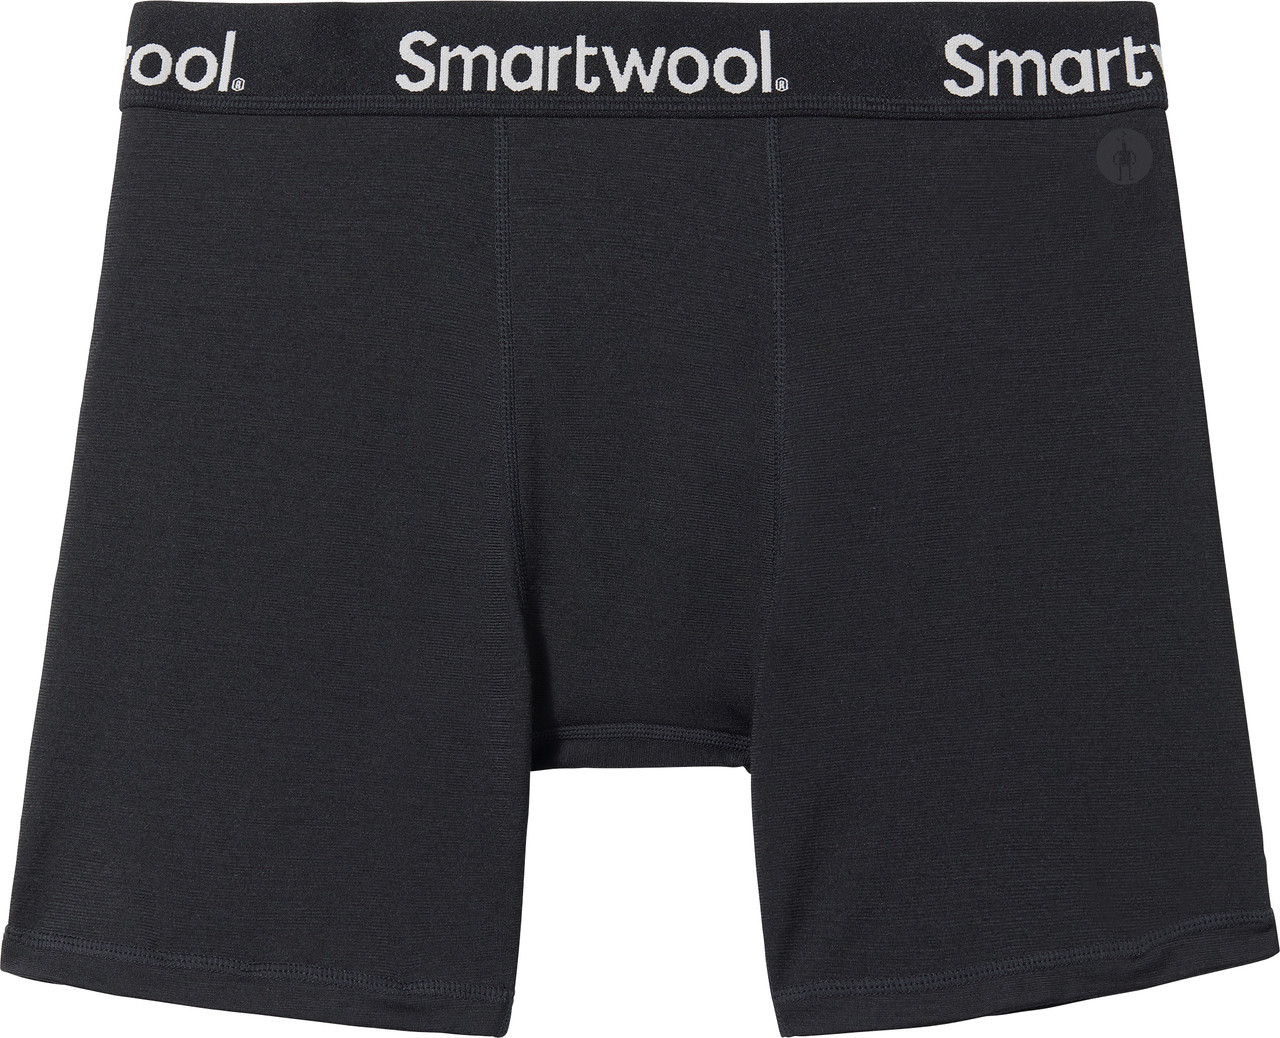 Smartwool Boxer Brief Boxed - Men's | MEC